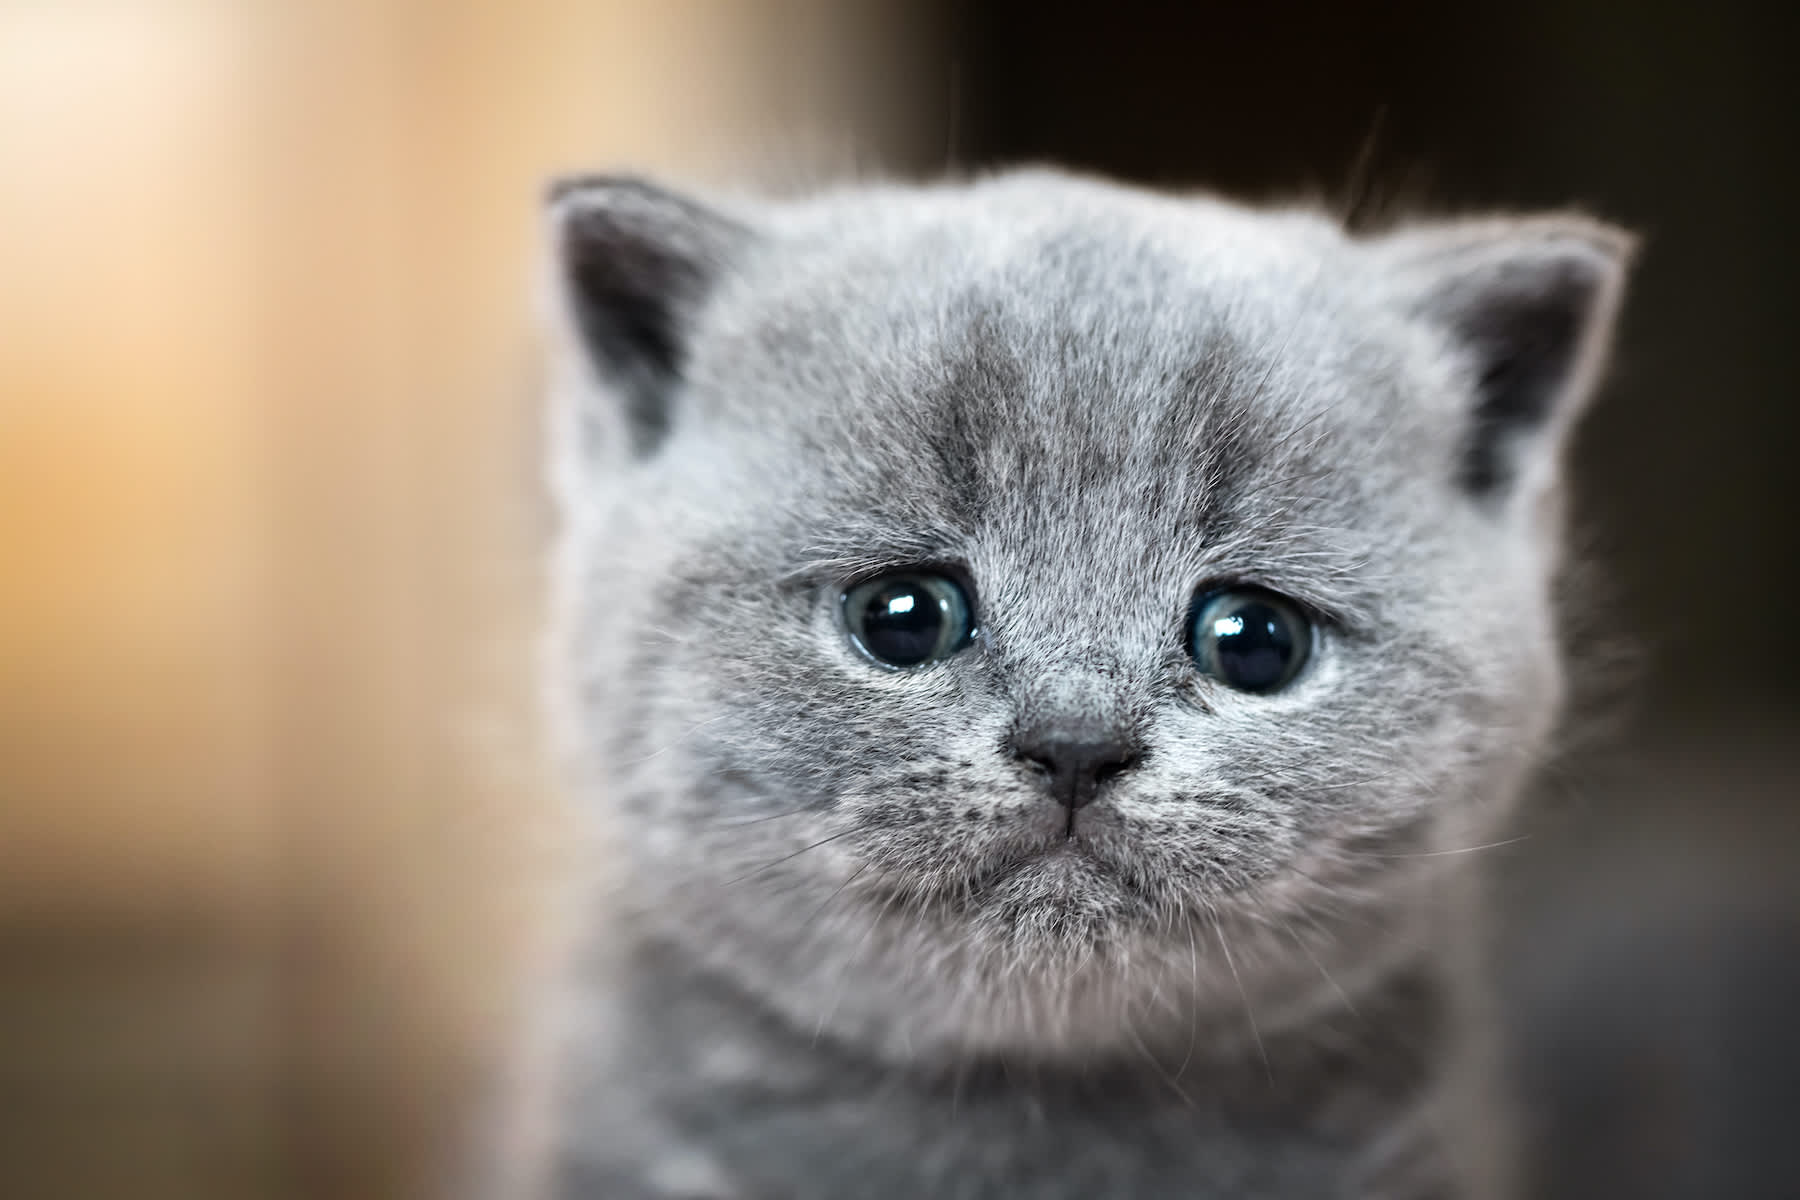 Canva - Cute kitten portrait. British Shorthair cat